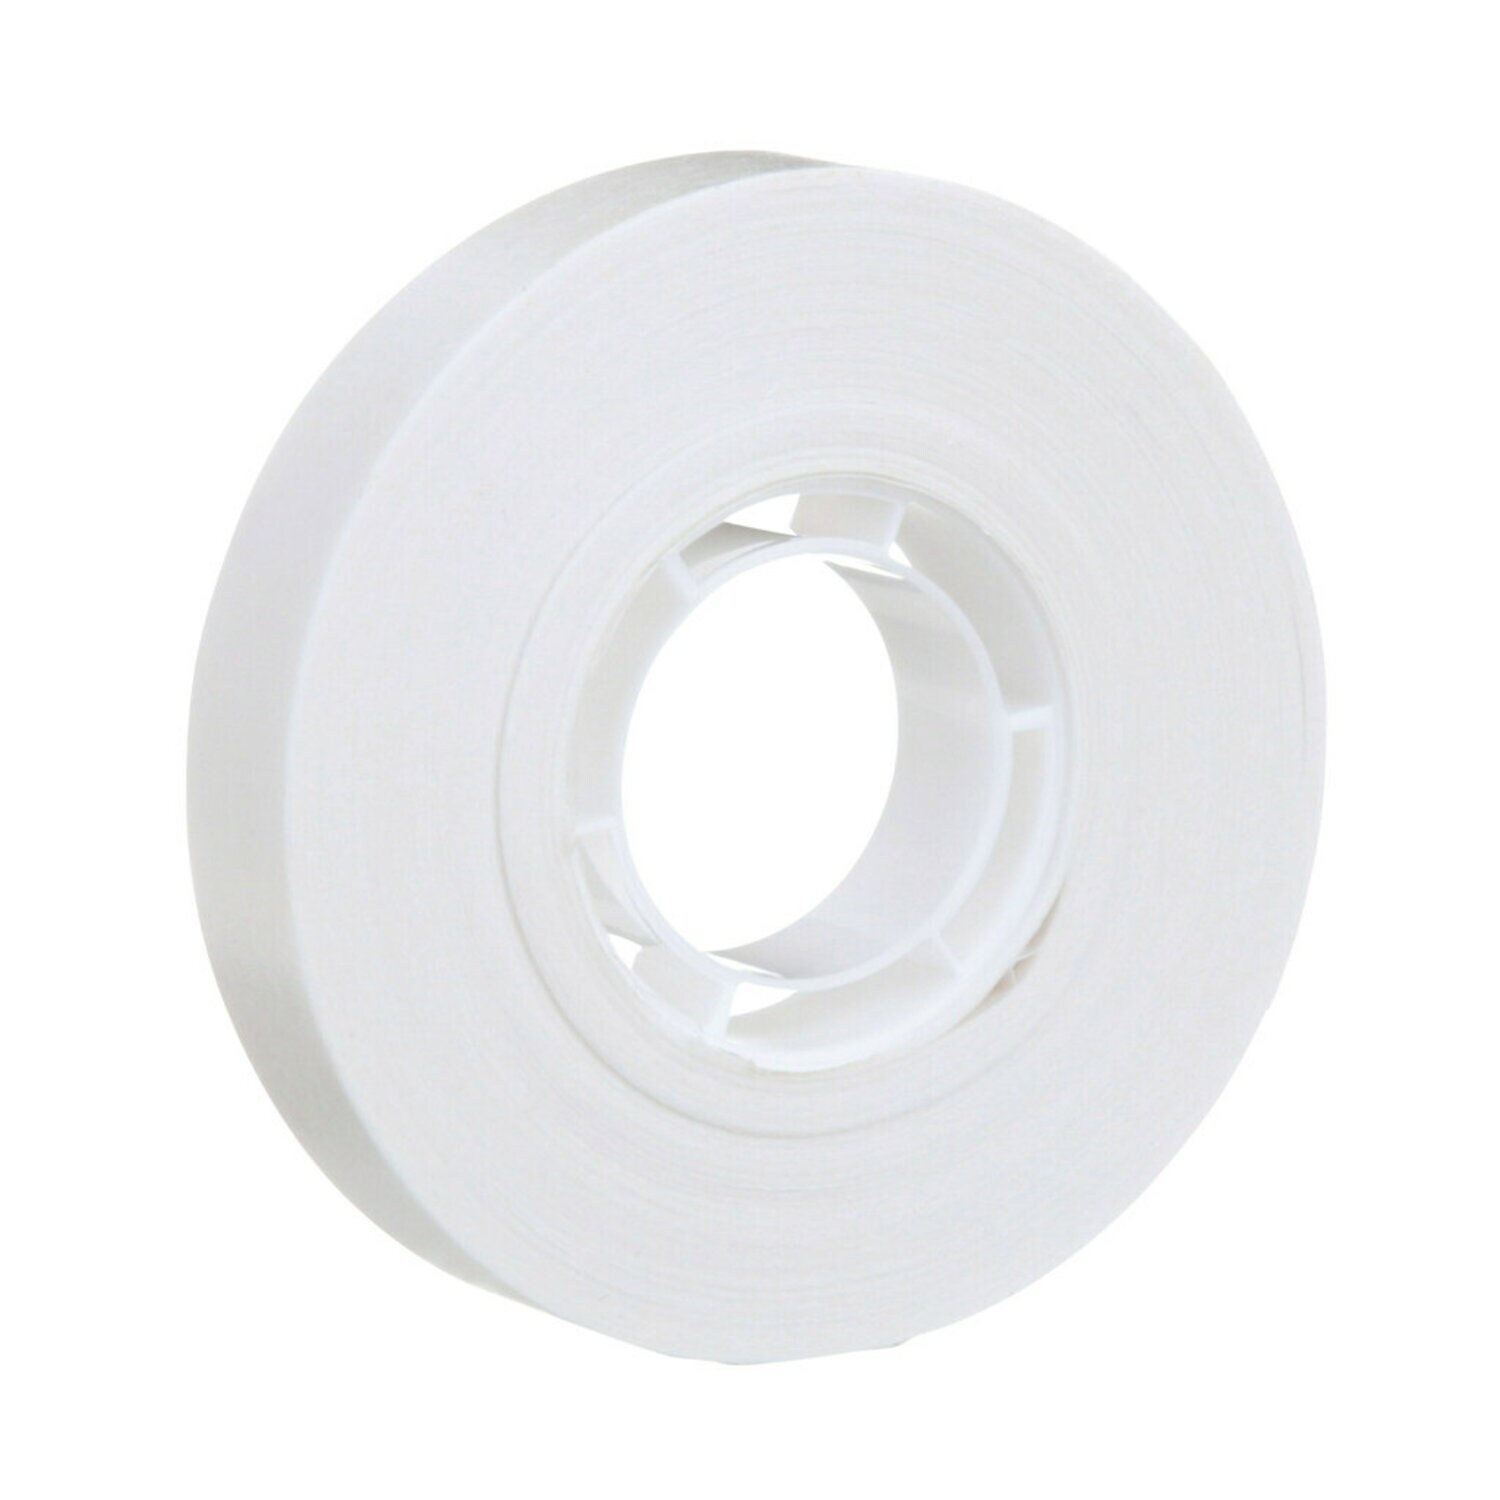 Labeling Tape, 1in x 500in per Roll, 3 Rolls/Box, White